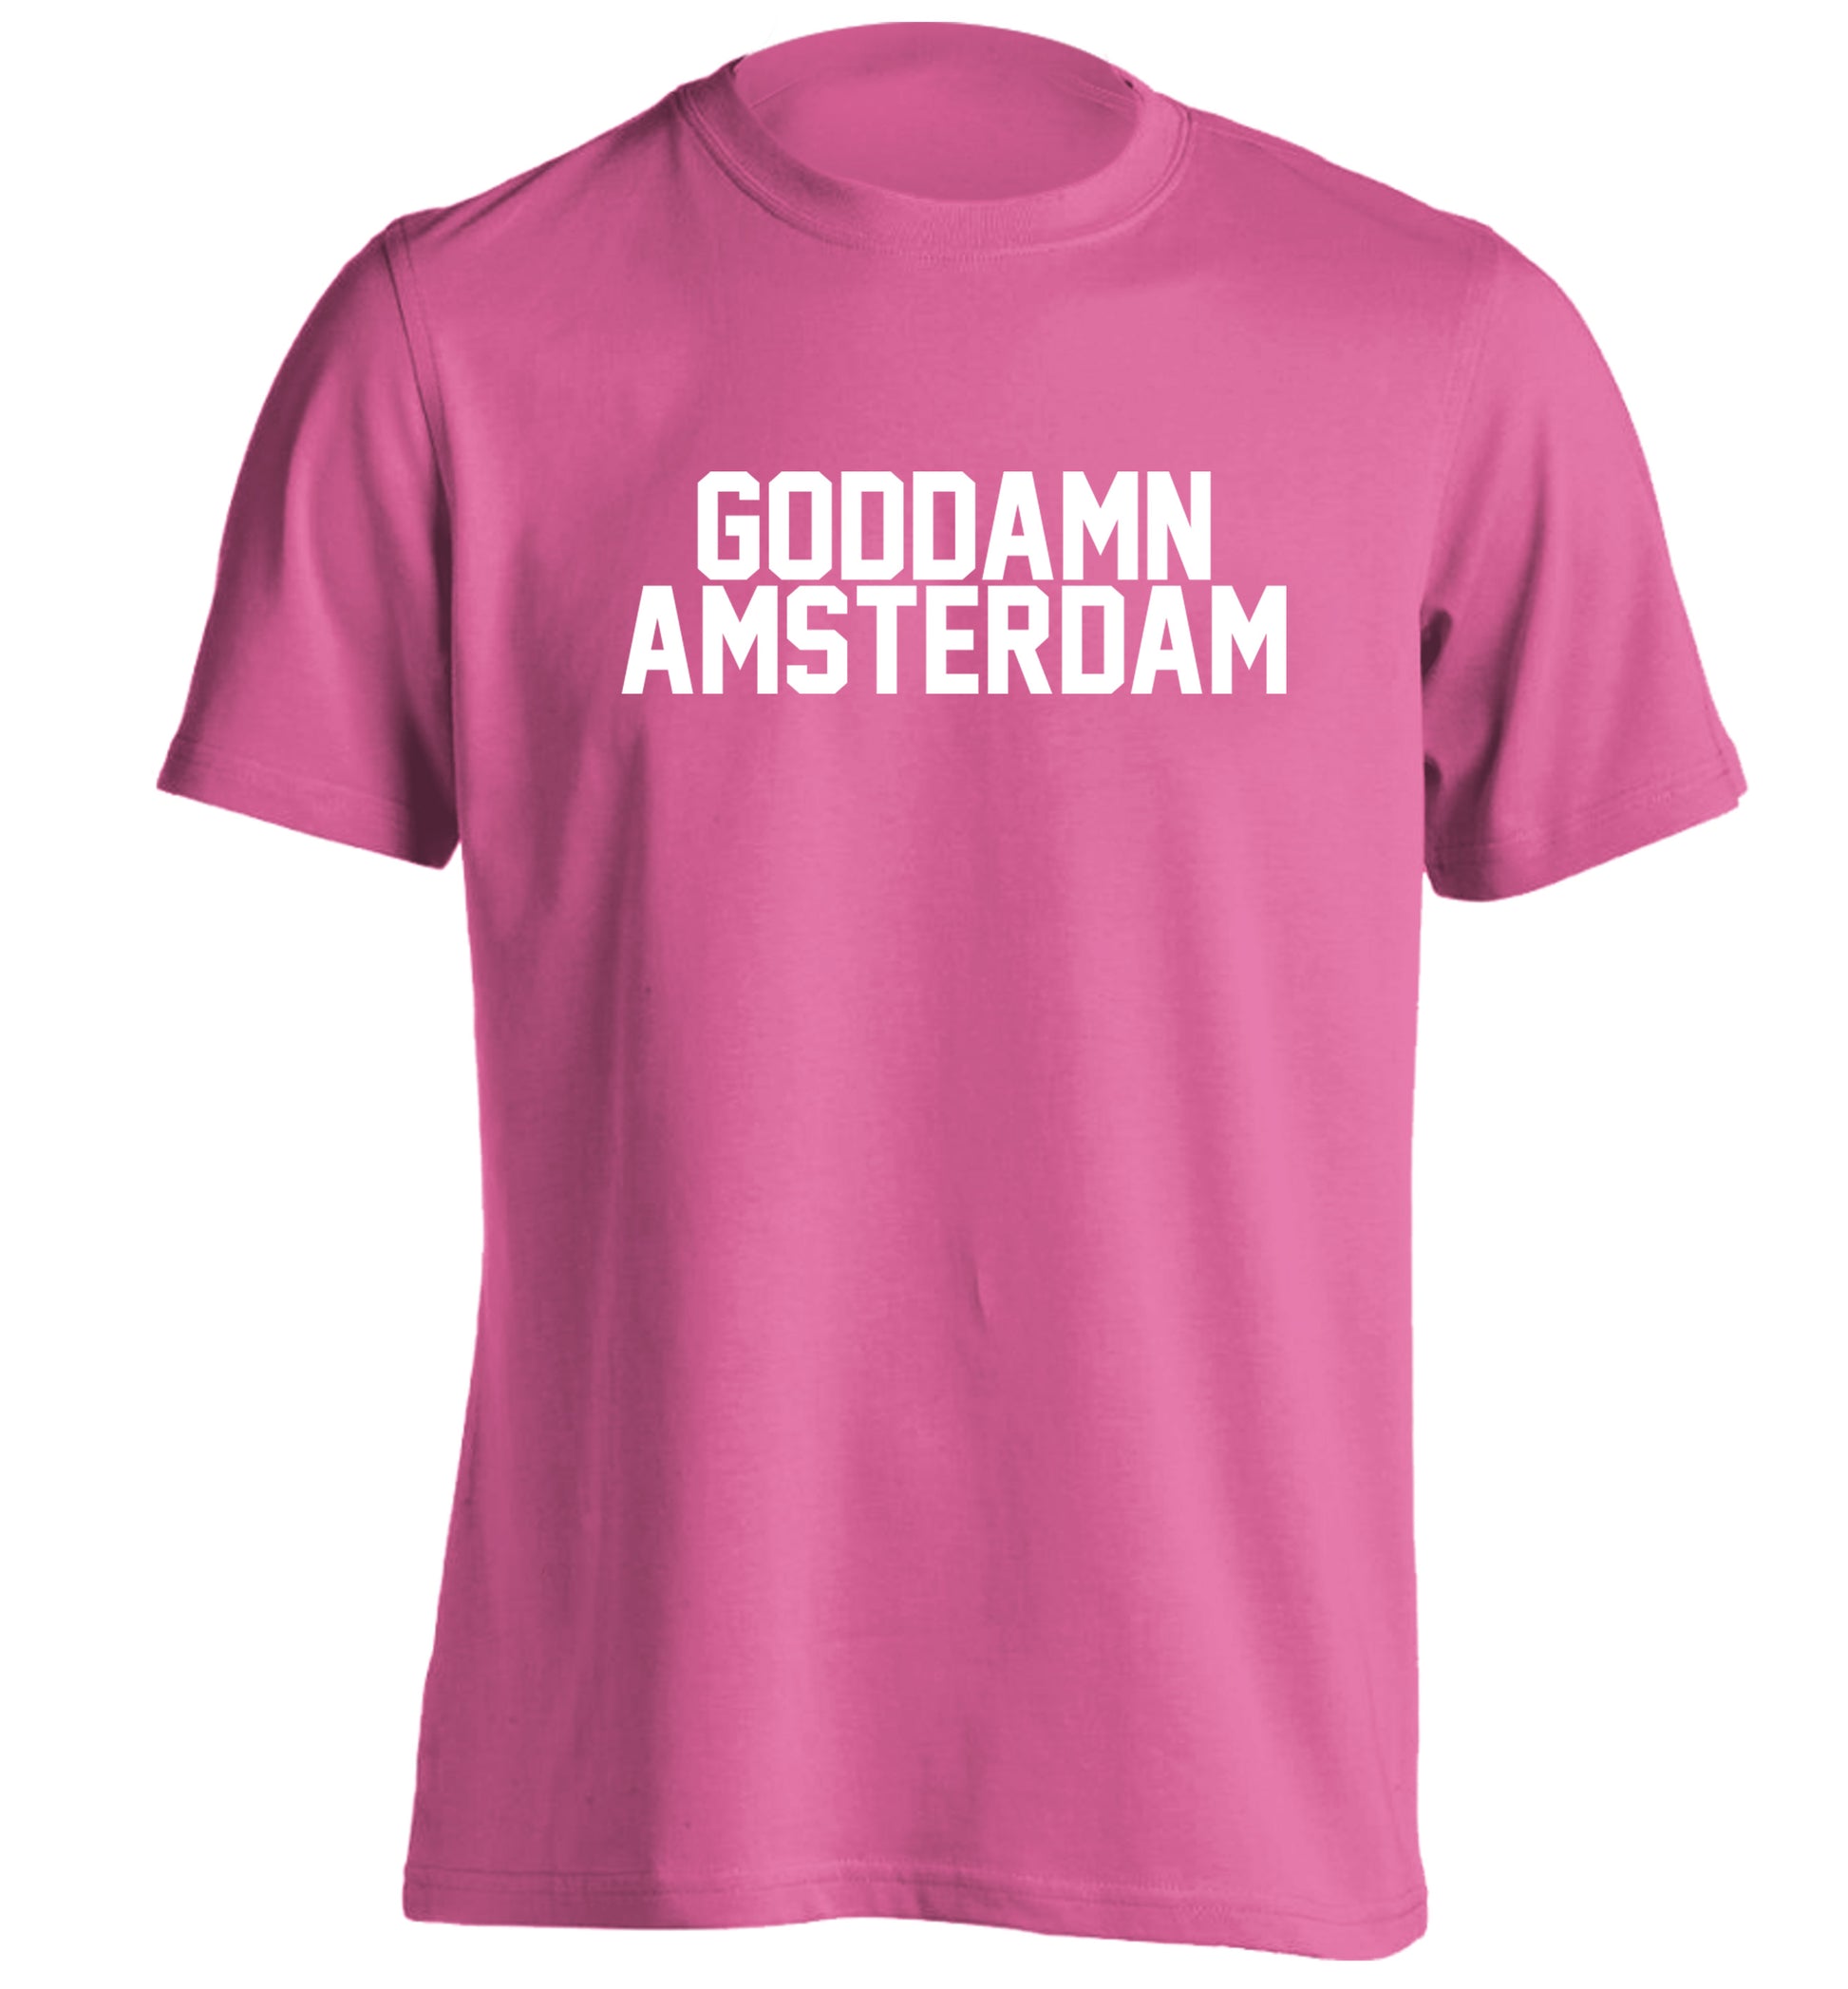 Goddamn Amsterdam adults unisex pink Tshirt 2XL